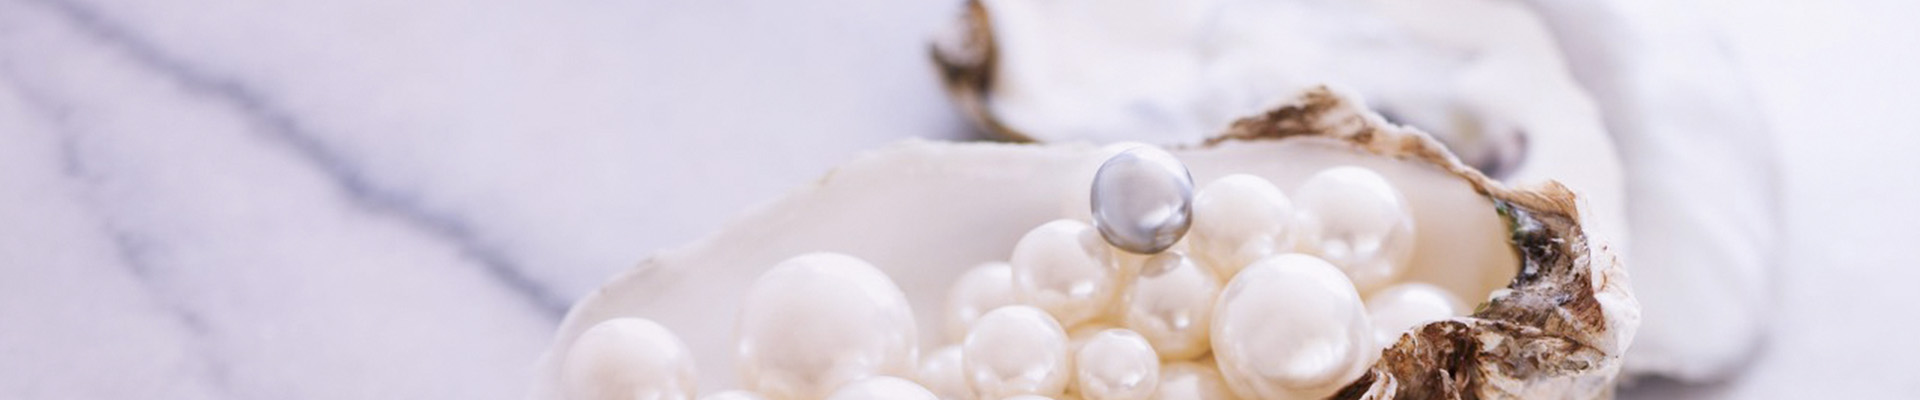 16-19mm baroque pearl